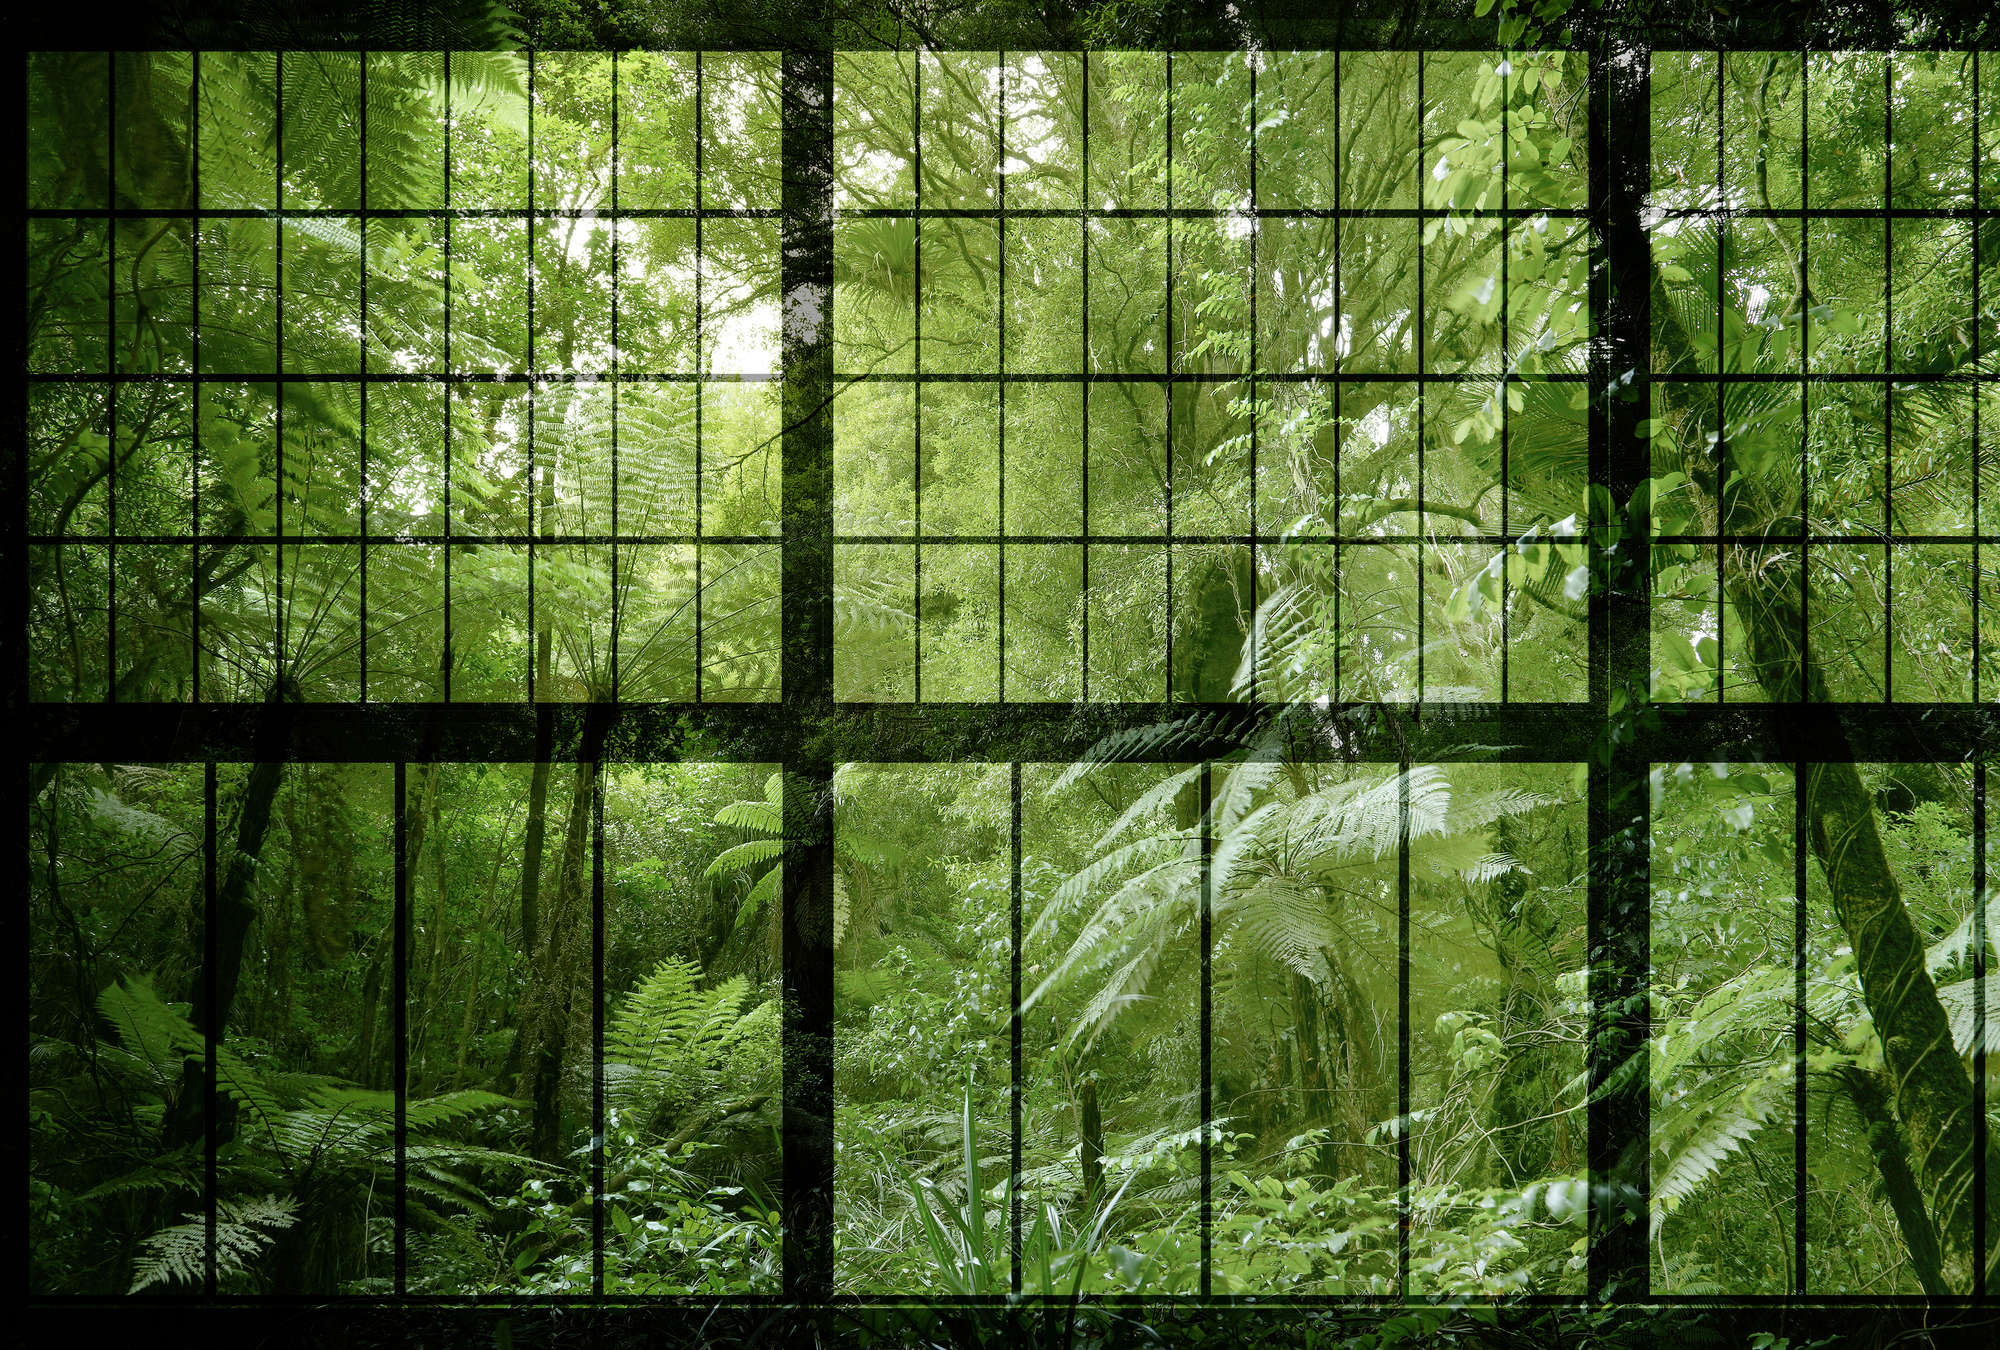             Rainforest 2 - Loft Window Wallpaper with Jungle View - Green, Black | Premium Smooth Non-woven
        